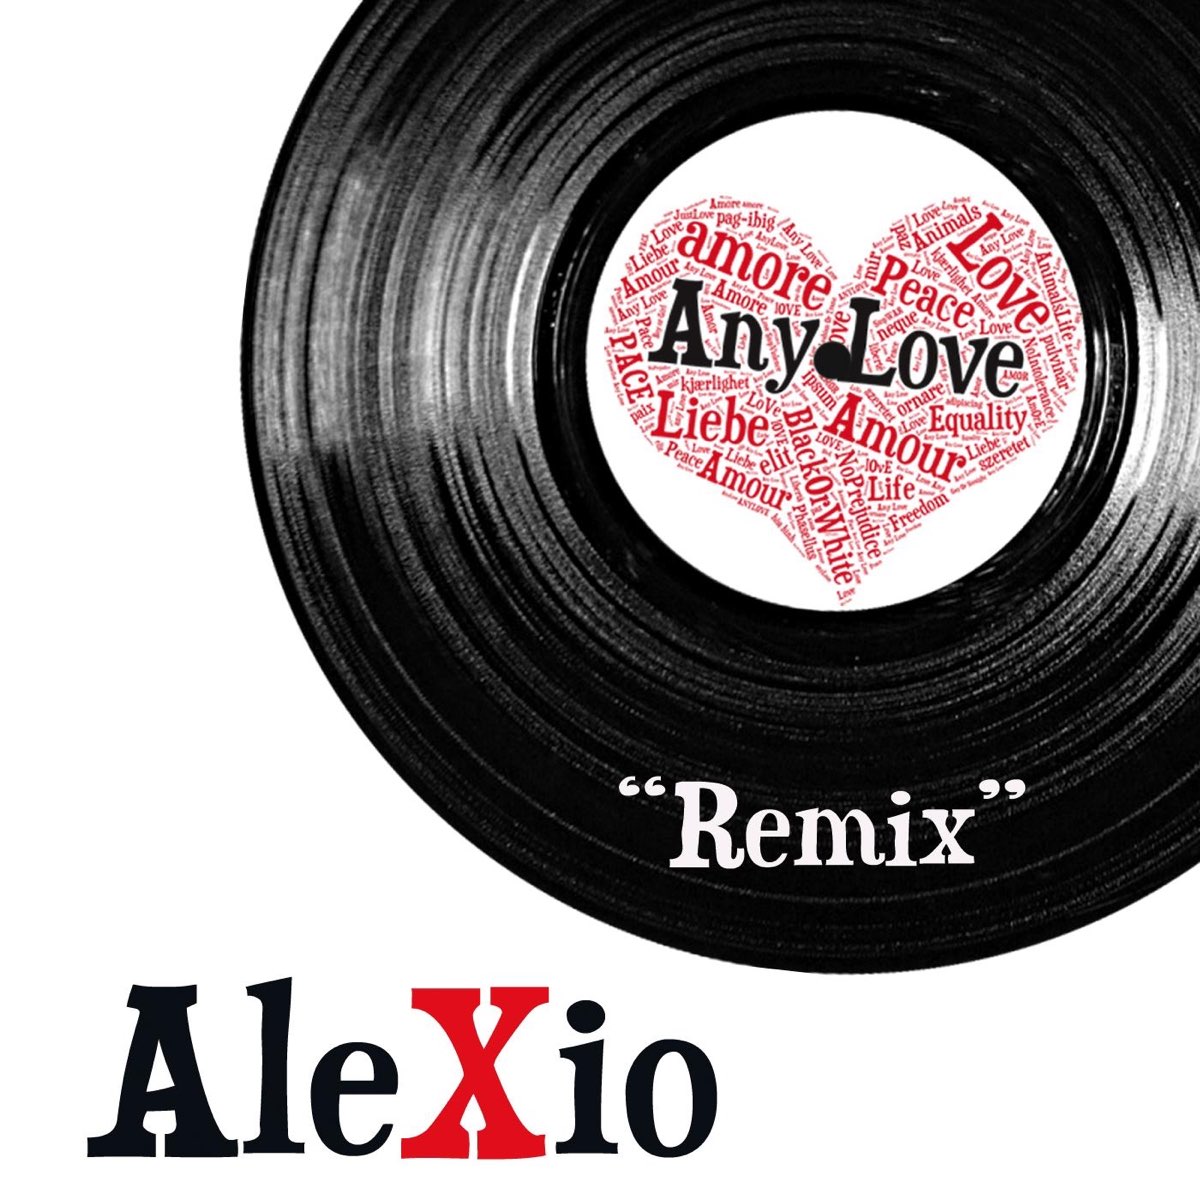 Love Remix. Lovely песня ремикс. Любимые Remix. Any Love. Обожай ремикс